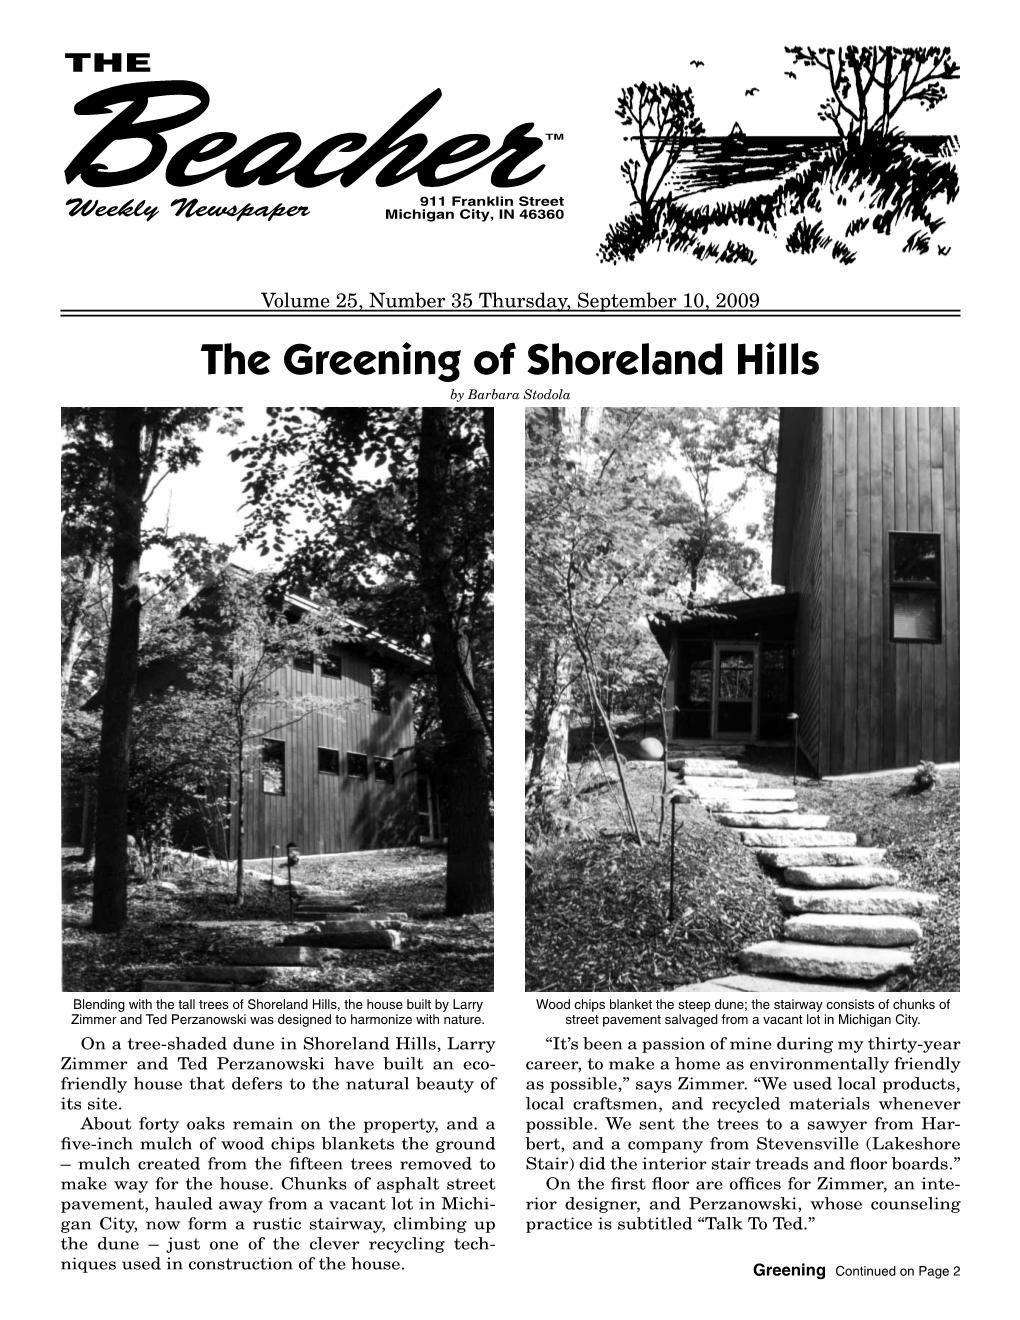 The Greening of Shoreland Hills by Barbara Stodola